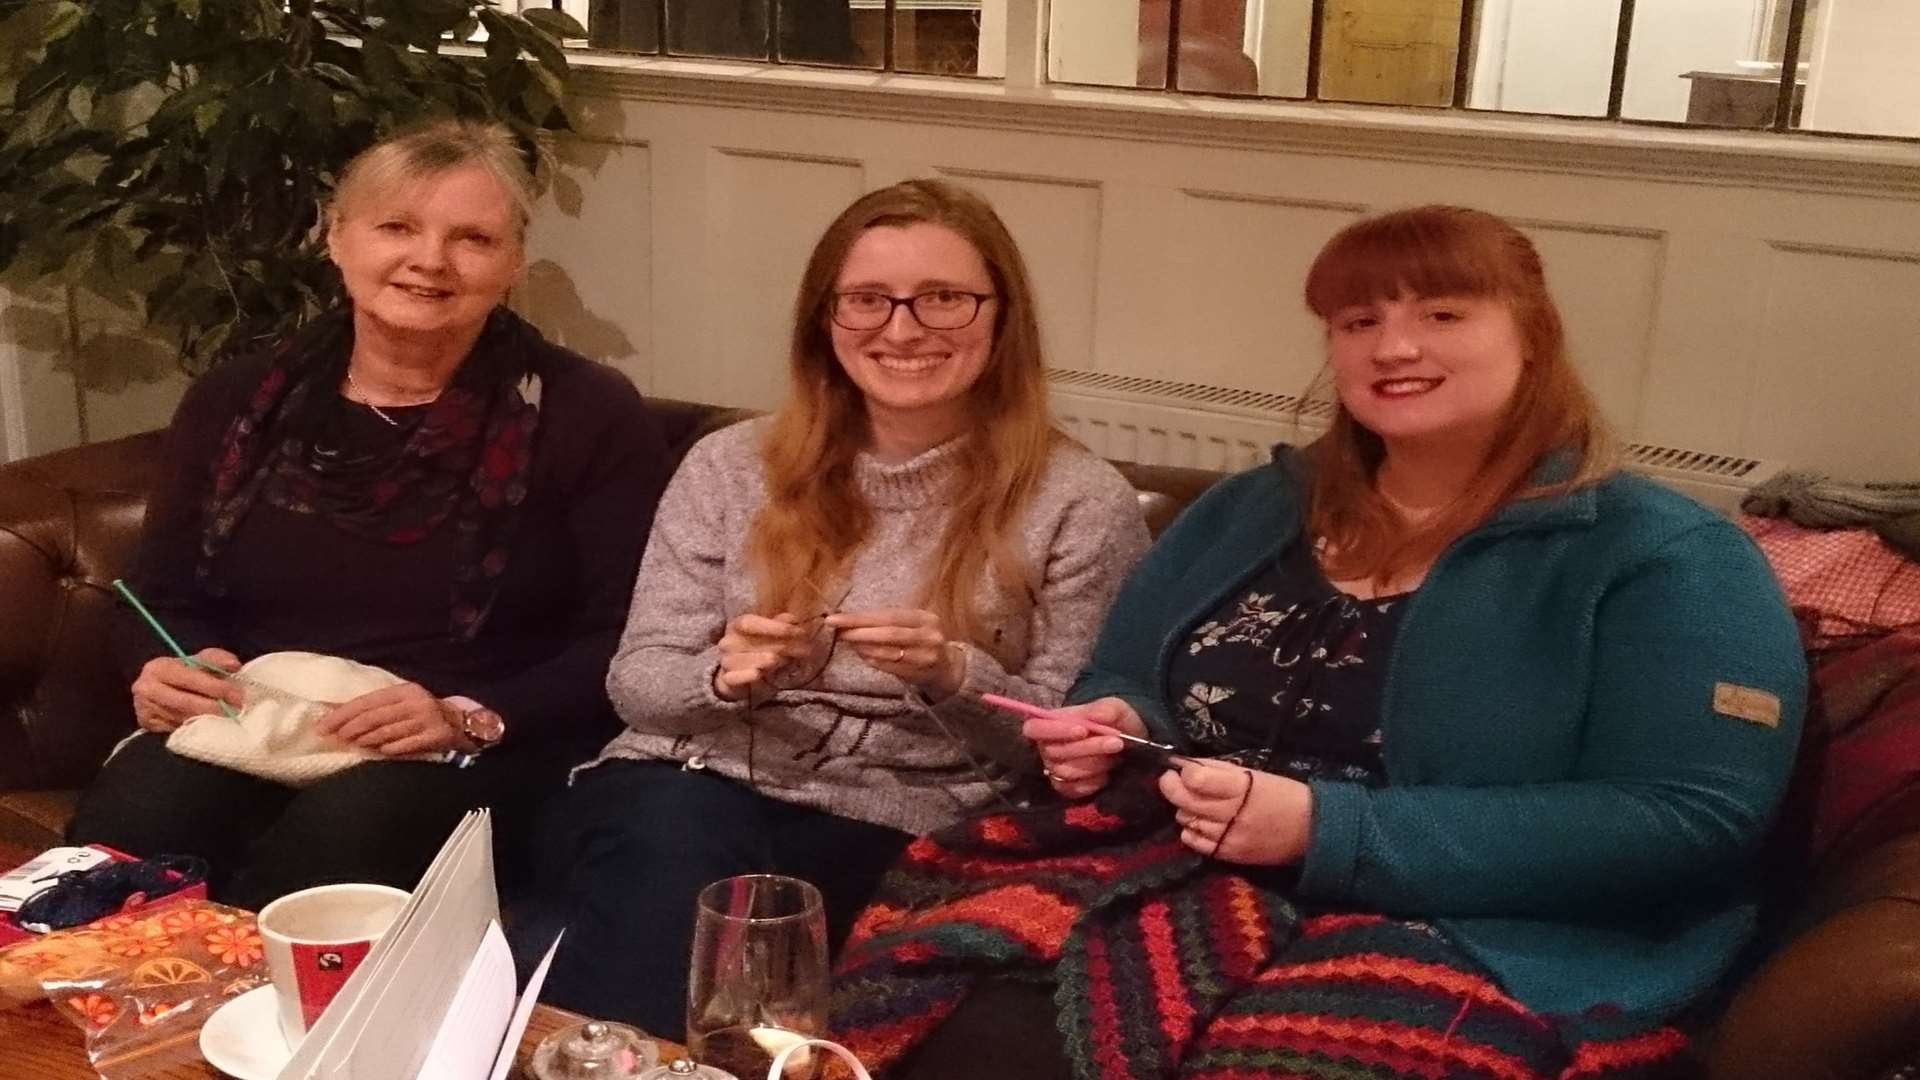 Jan Shapley, Jenny Ford, Felicity Dolbear from Deal Knitting Club made the wreaths